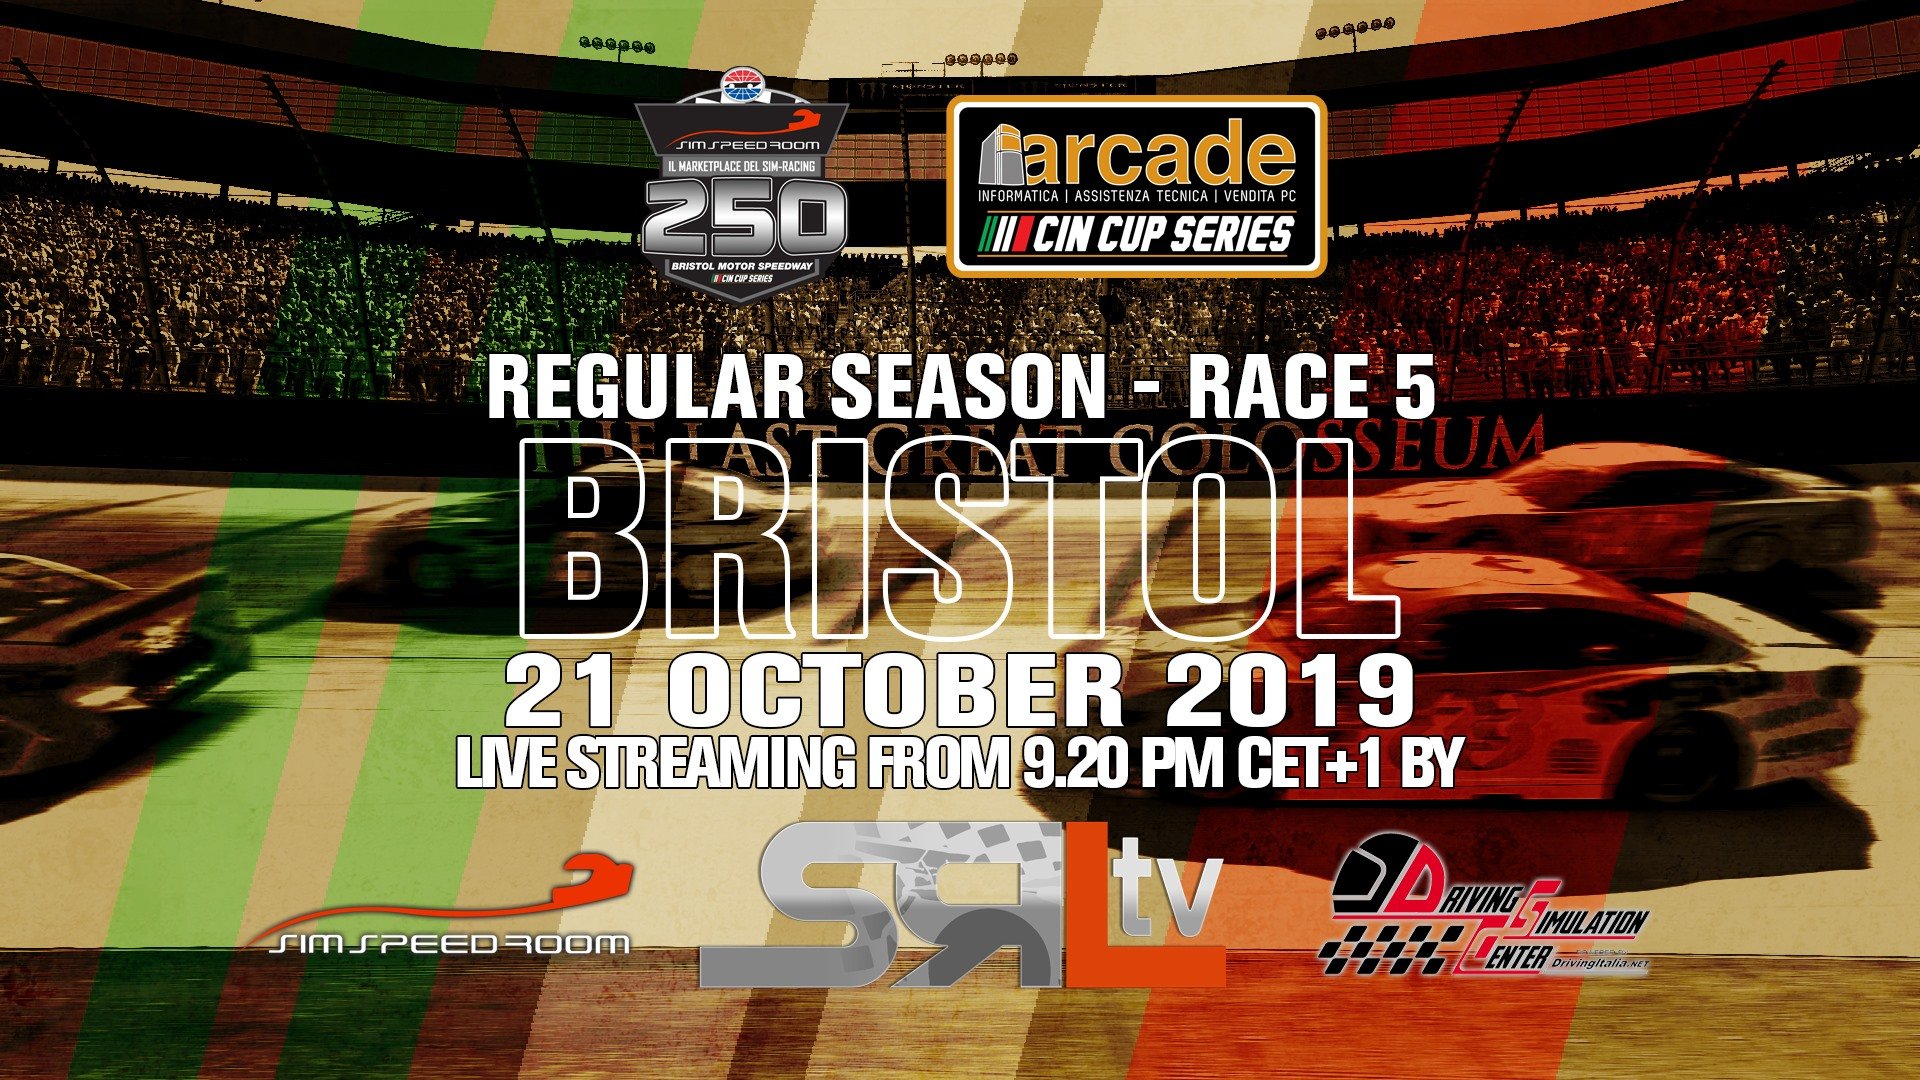 More information about "Campionato Italiano Nascar: Sim Speed Room Bristol 250"